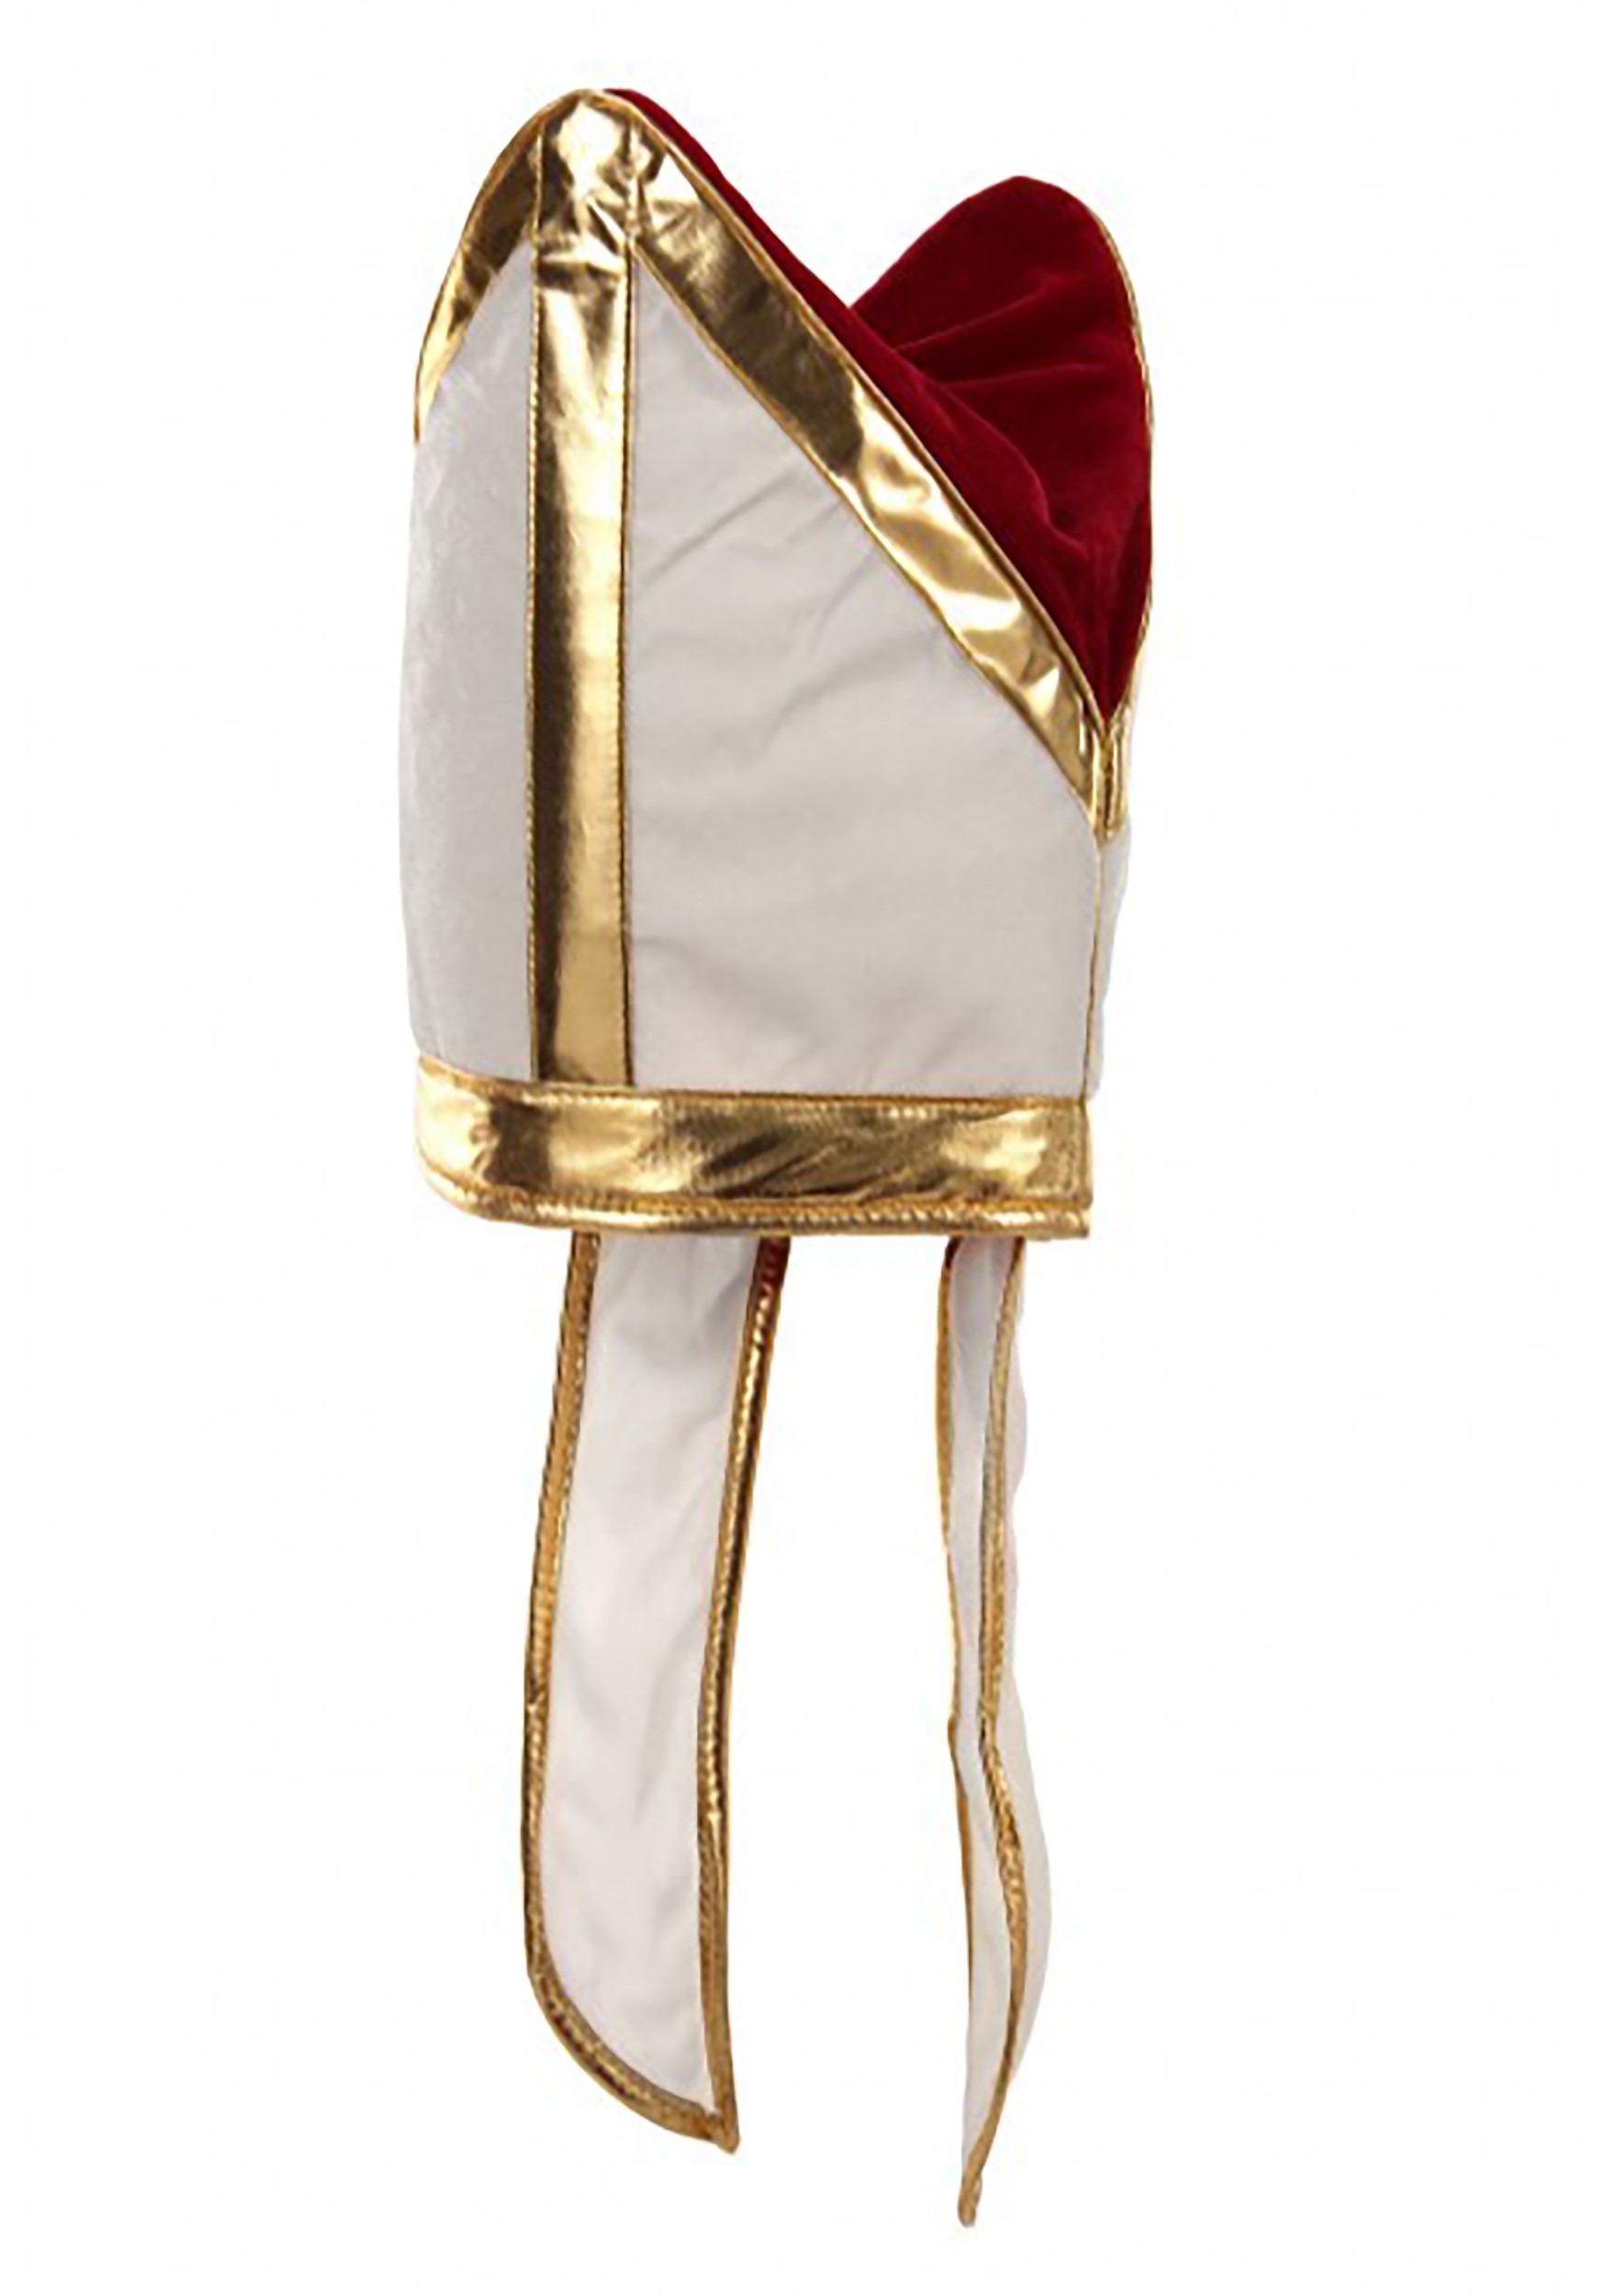 Pope Plush White Costume Hat